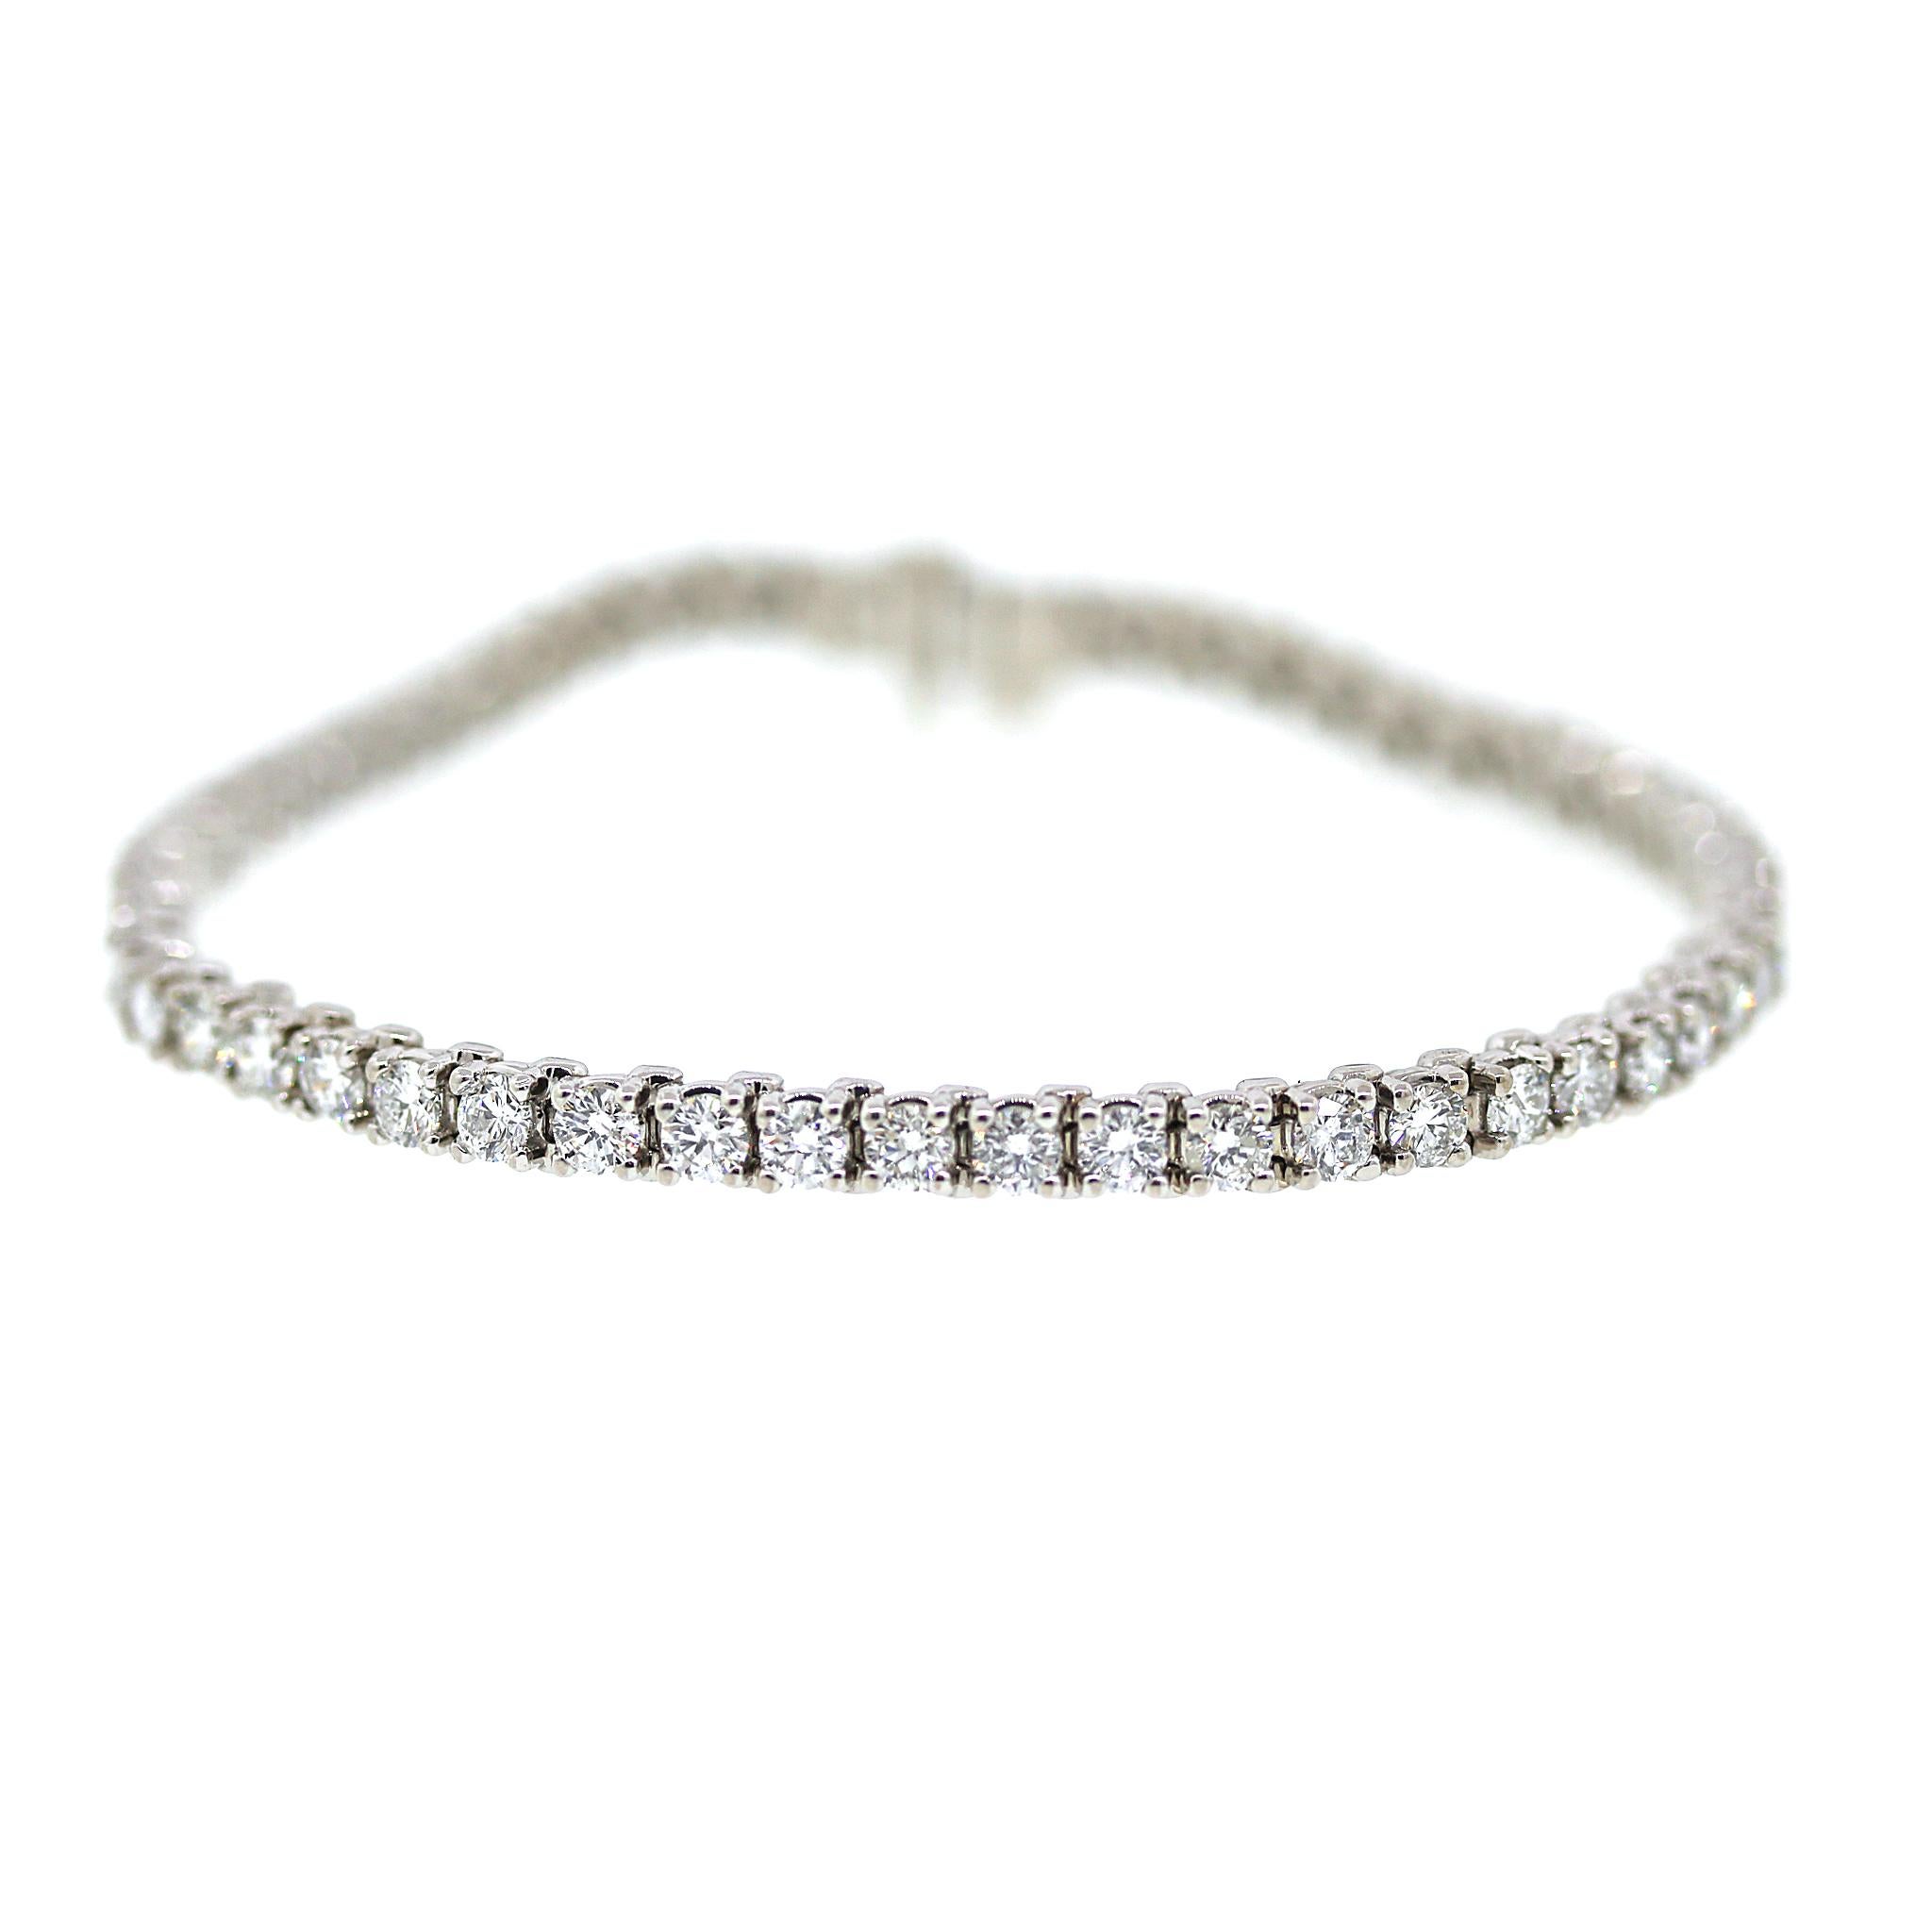 Women's Classic 5.80 carat Diamond Tennis Bracelet